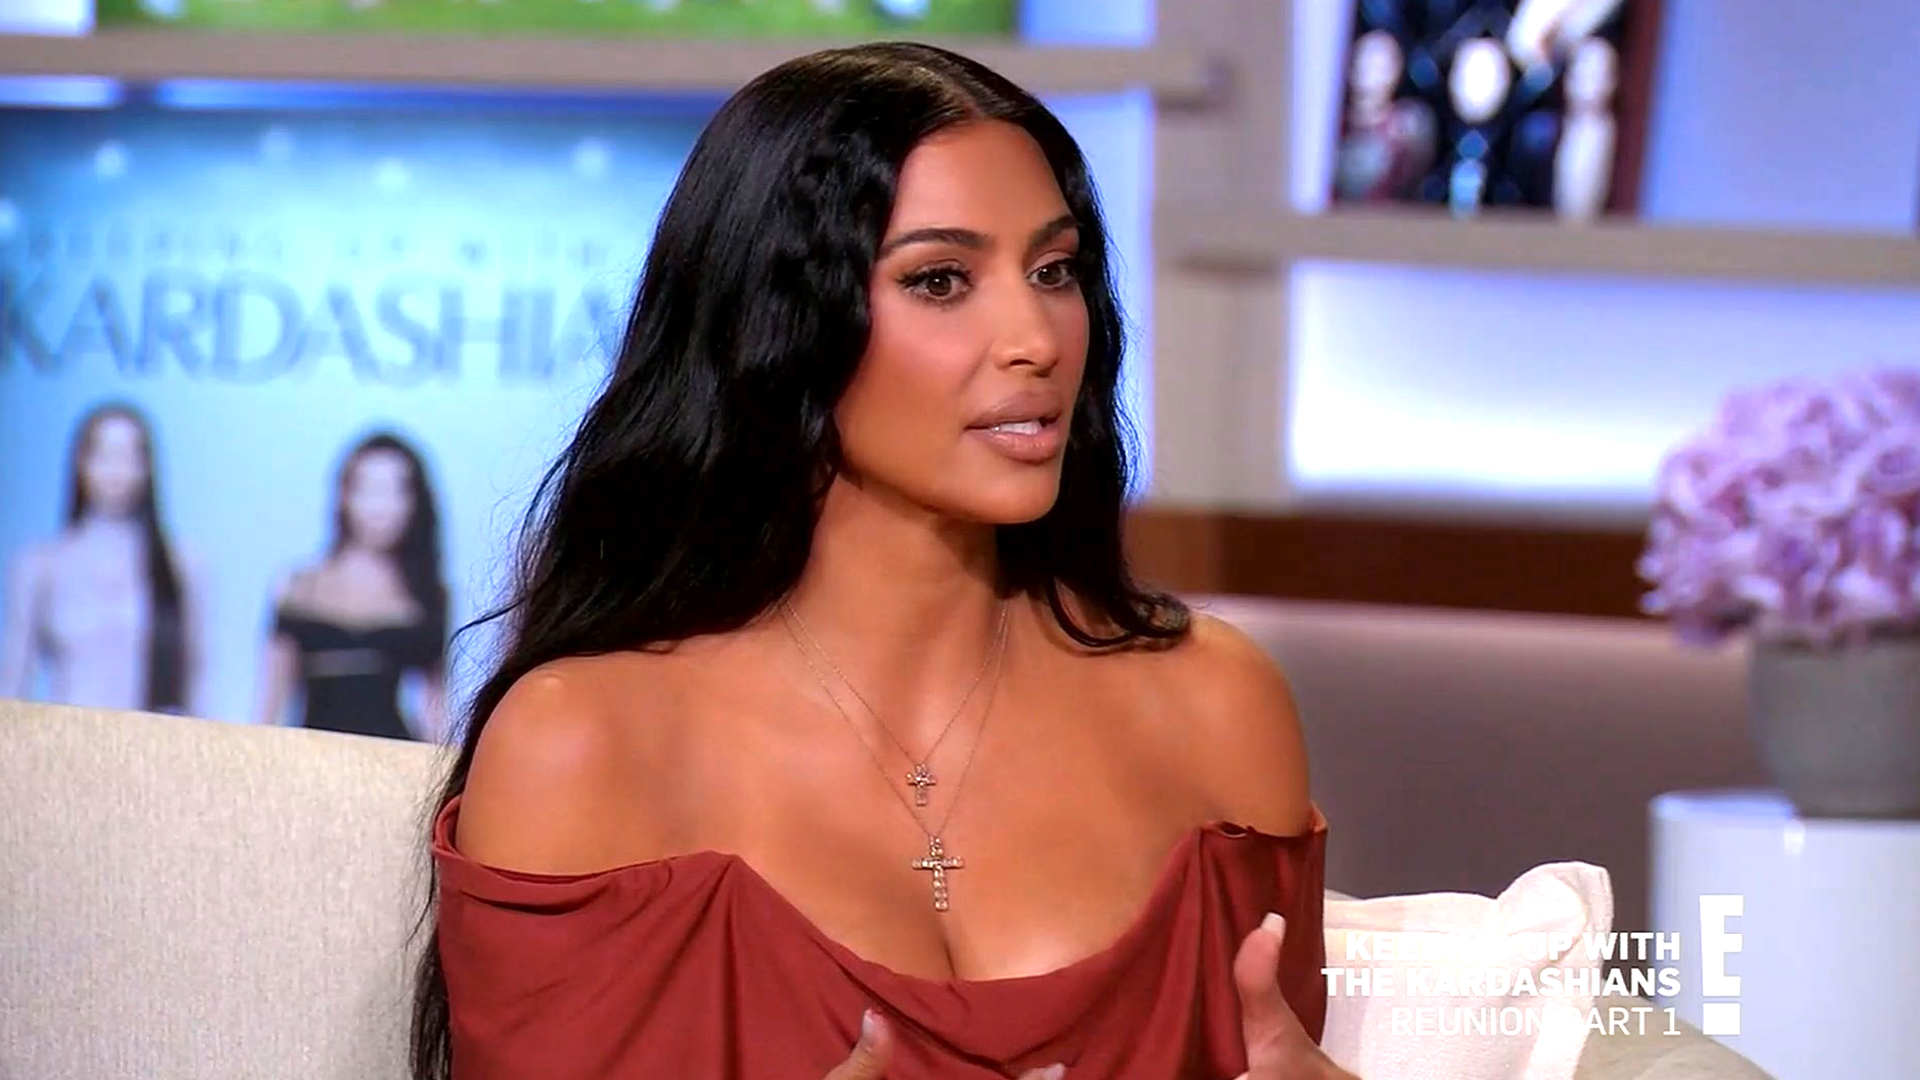 Xxx Hd Kim Kardashian - Kim Kardashian admits her sex tape helped make 'KUWTK' successful